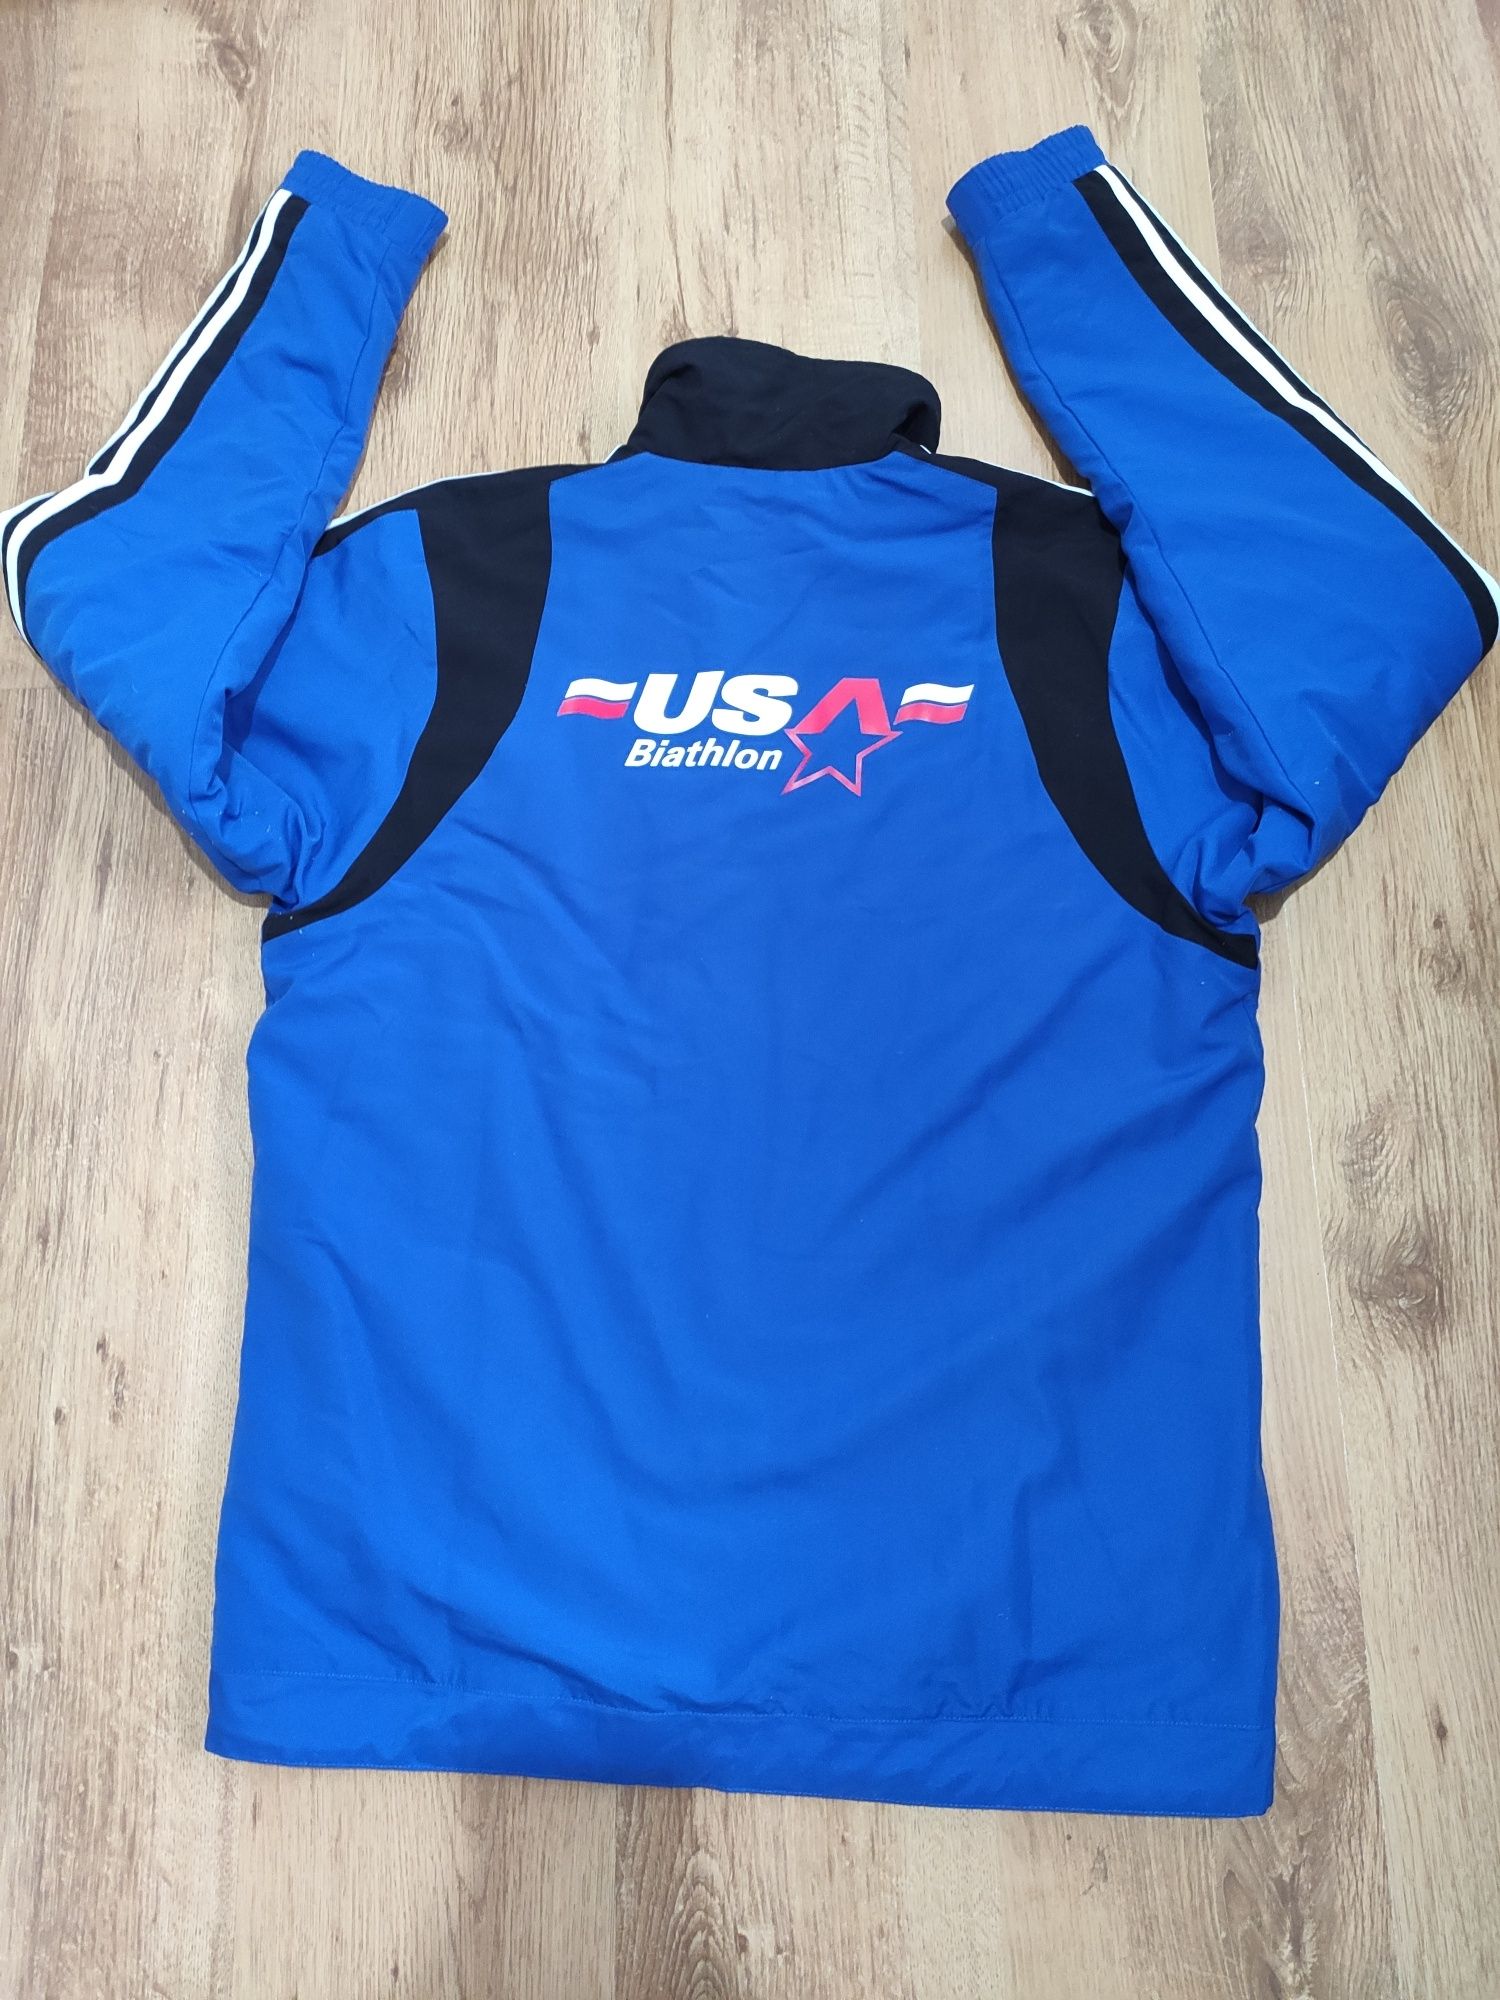 Trening gros captusit Adidas Team USA biathlon mărimea S